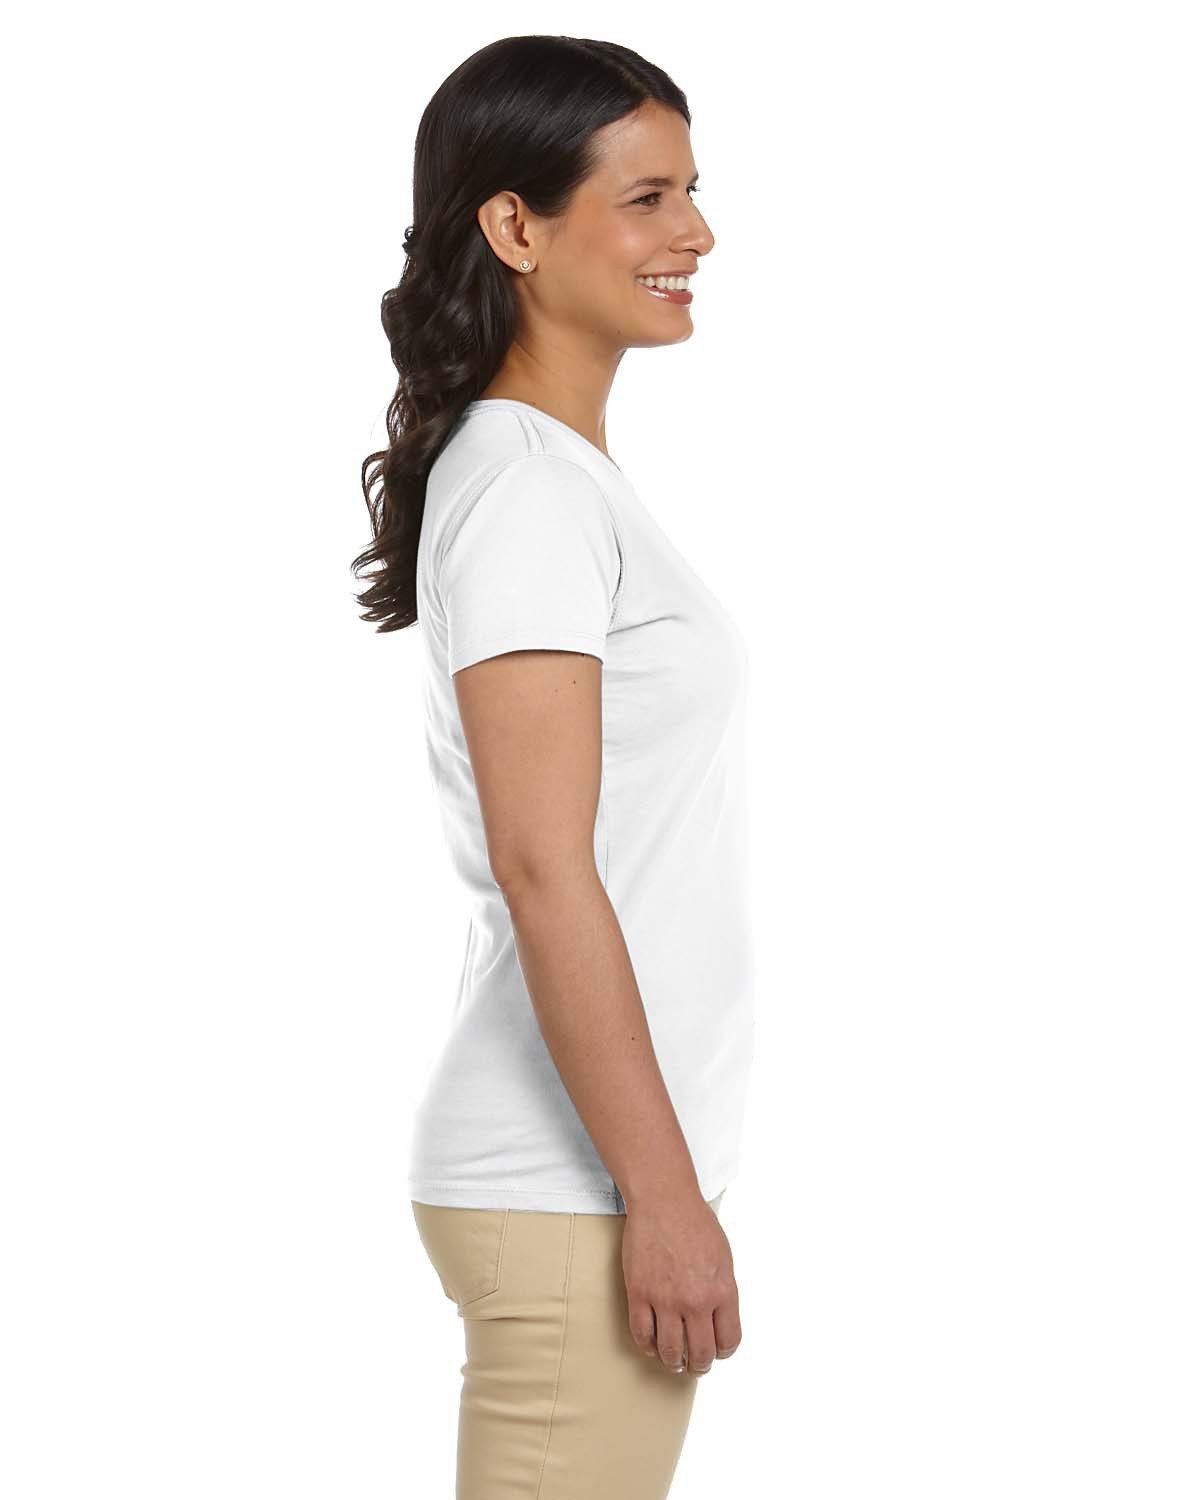 'econscious EC3000 Ladies Organic Cotton Classic Short Sleeve T-Shirt'